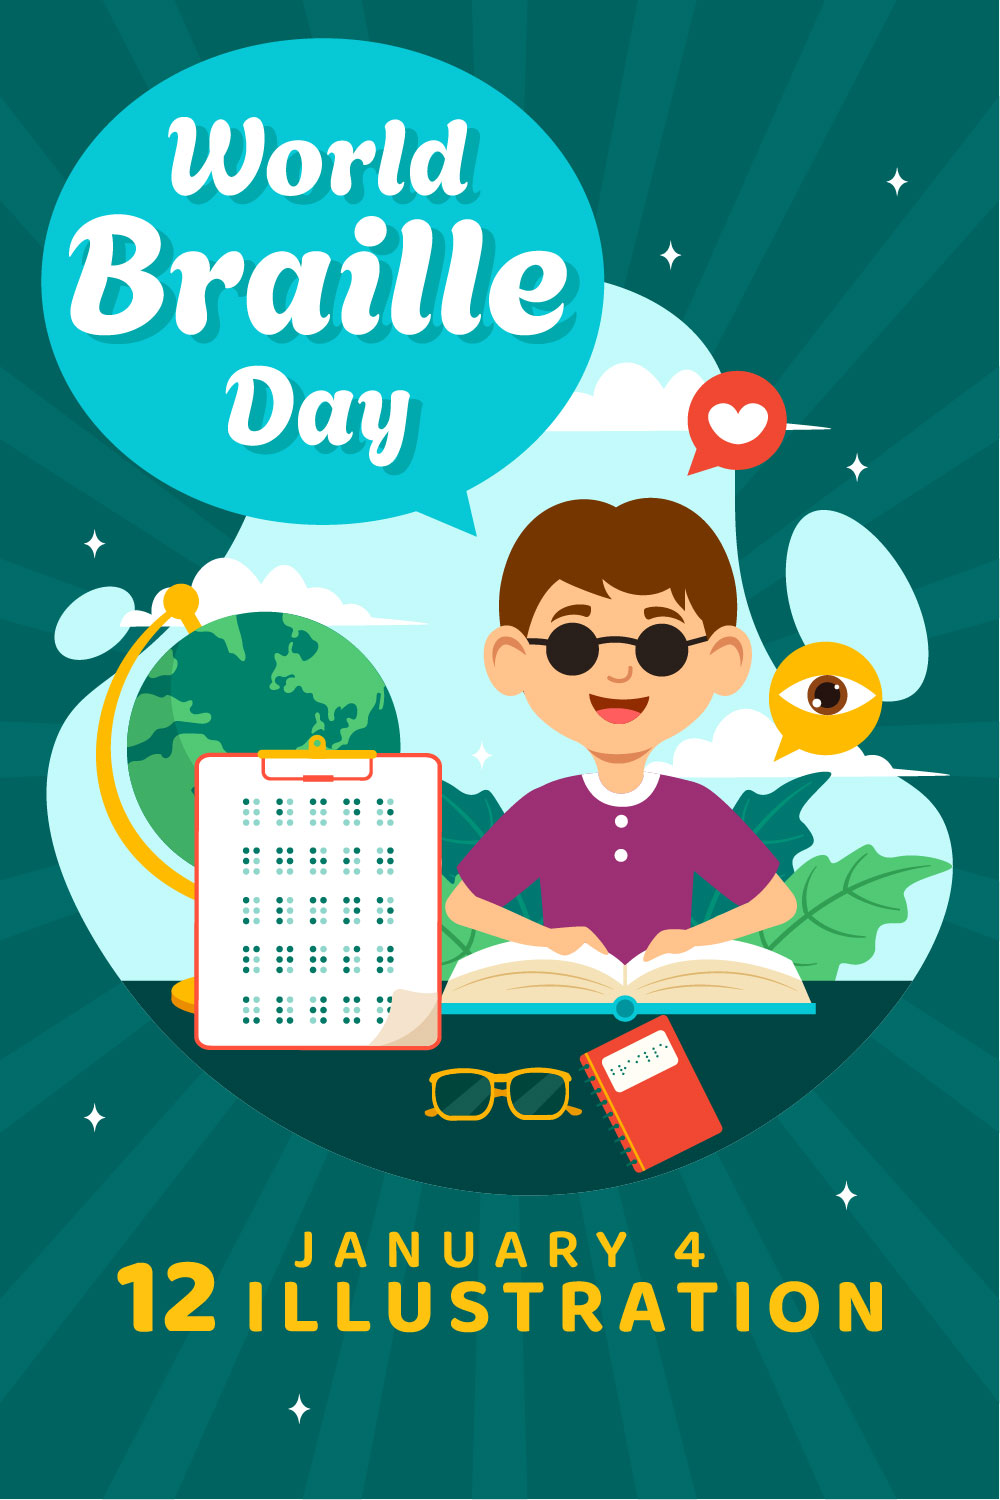 12 World Braille Day Illustration pinterest preview image.